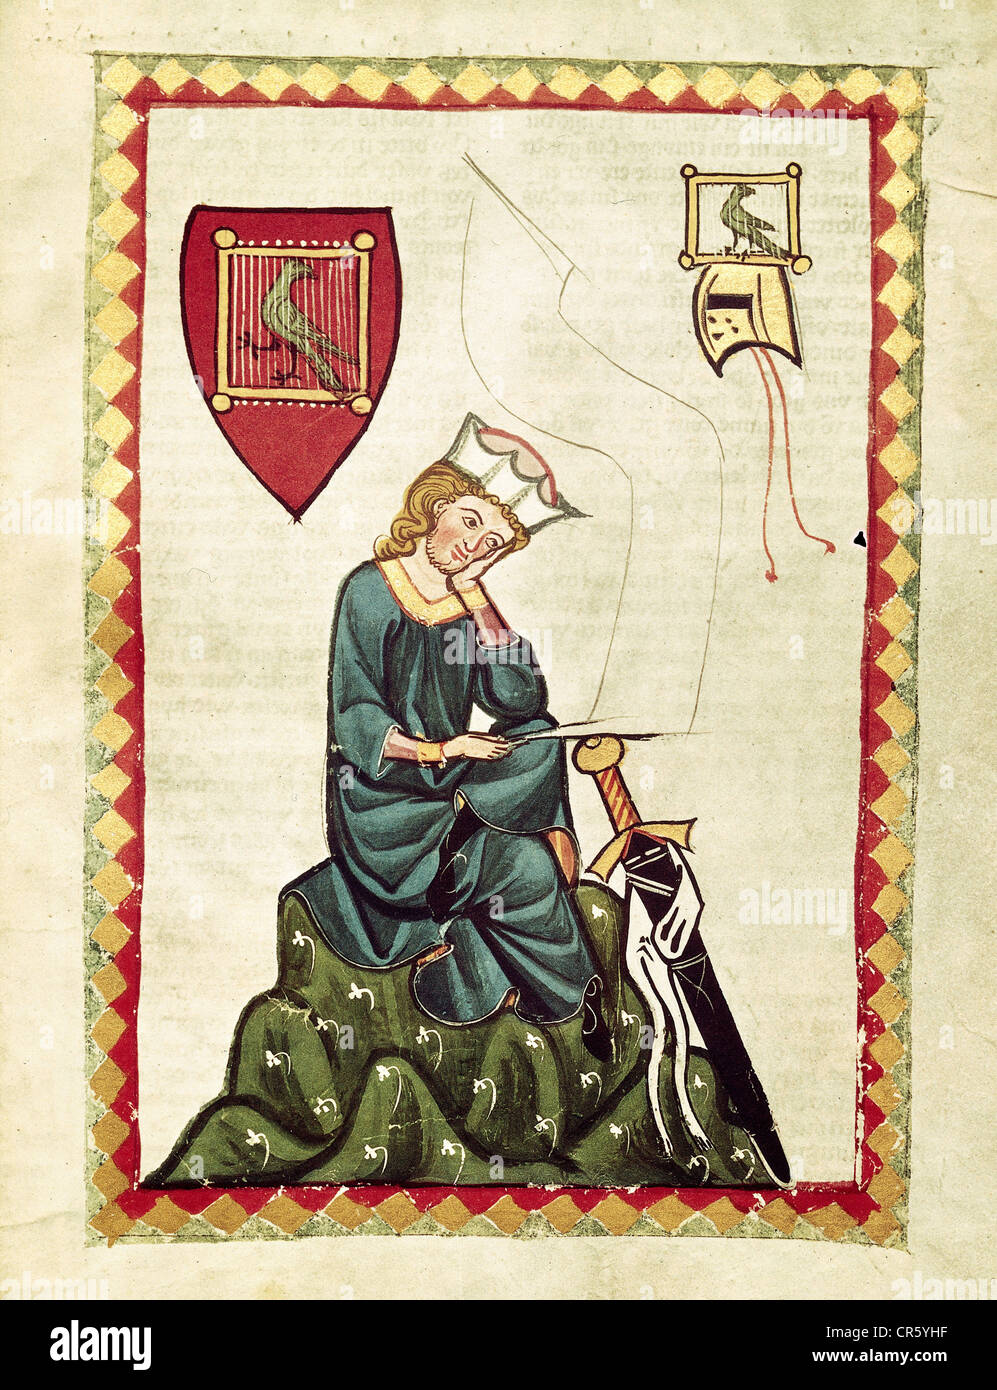 Walther von der Vogelweide, circa 1160 - circa 1230, minnesinger tedesco, poeta, mezza lunghezza, illuminazione, Codex Manesse, Zurigo 1305 - 1340, Biblioteca universitaria di Heidelberg, Foto Stock